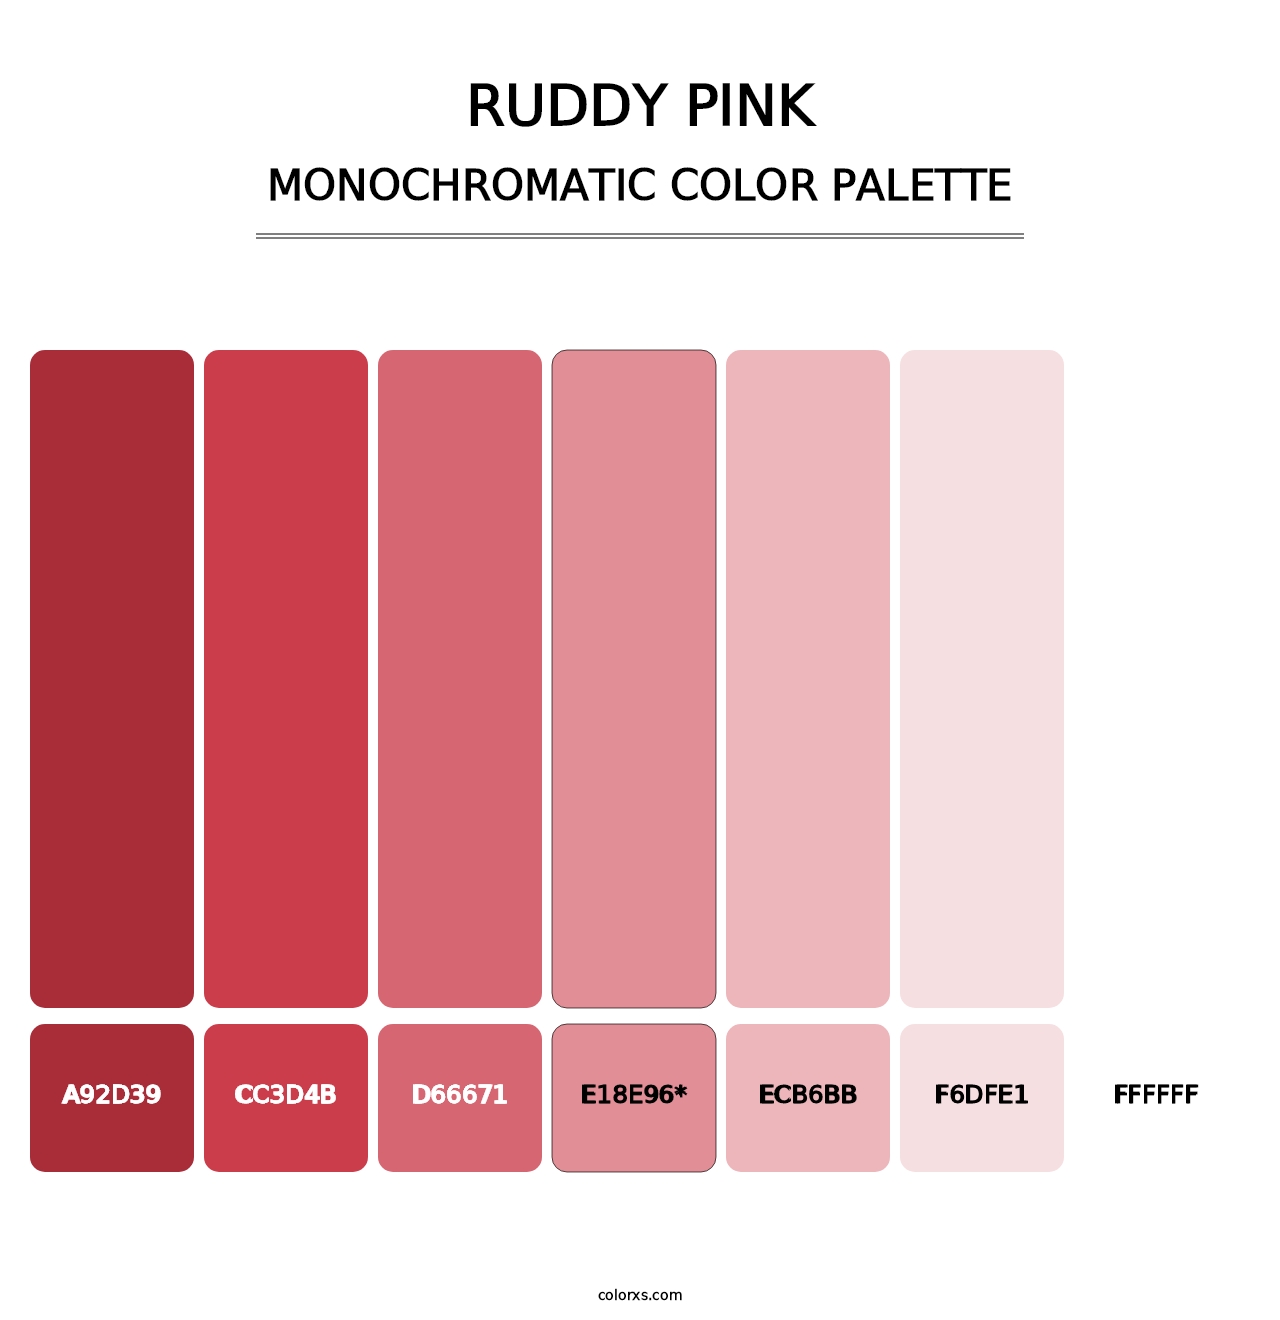 Ruddy Pink - Monochromatic Color Palette